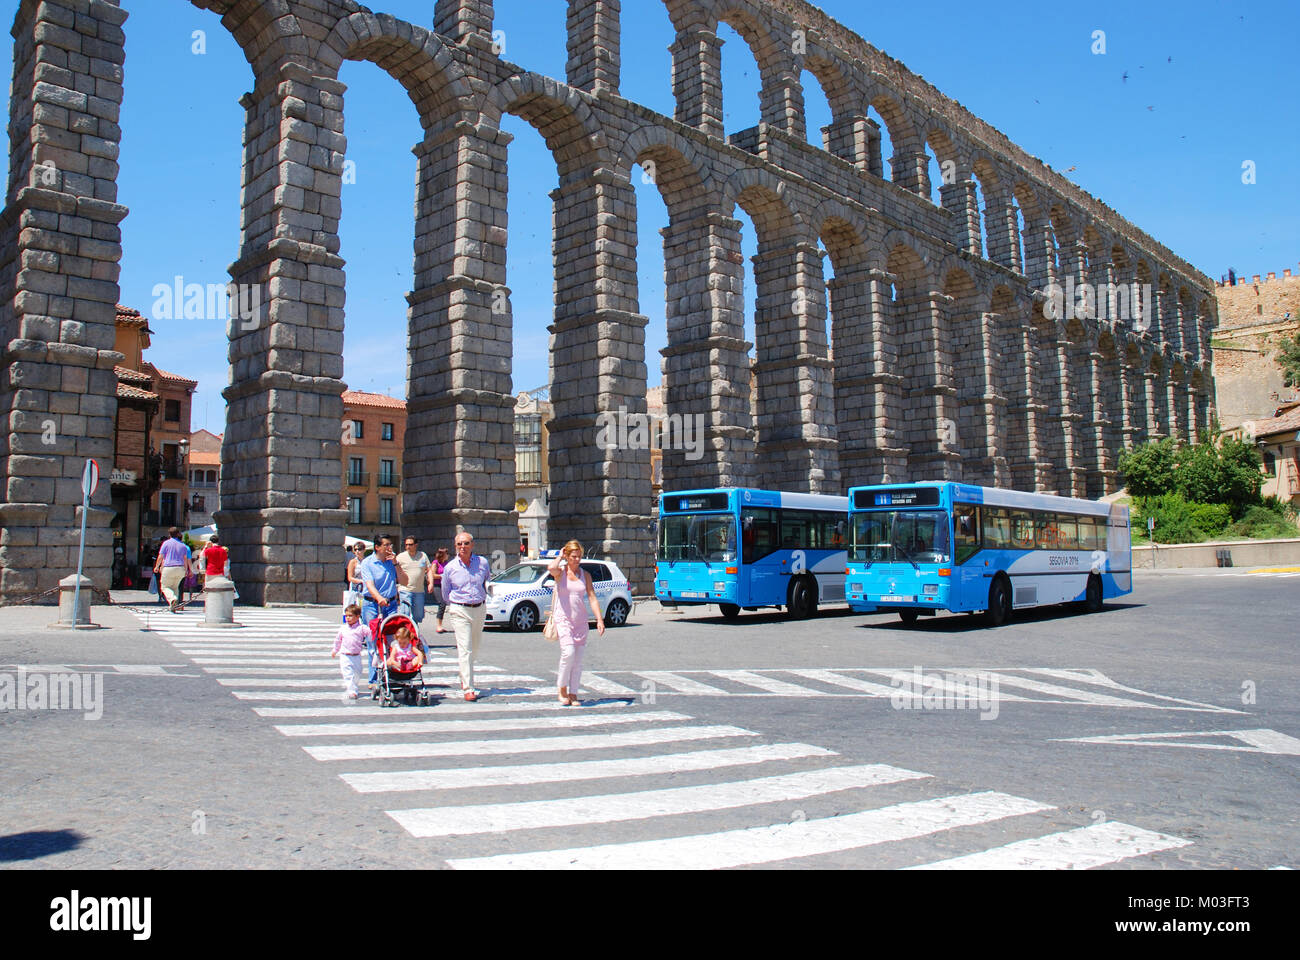 Roman Aqueduct. Segovia, Spain. Stock Photo